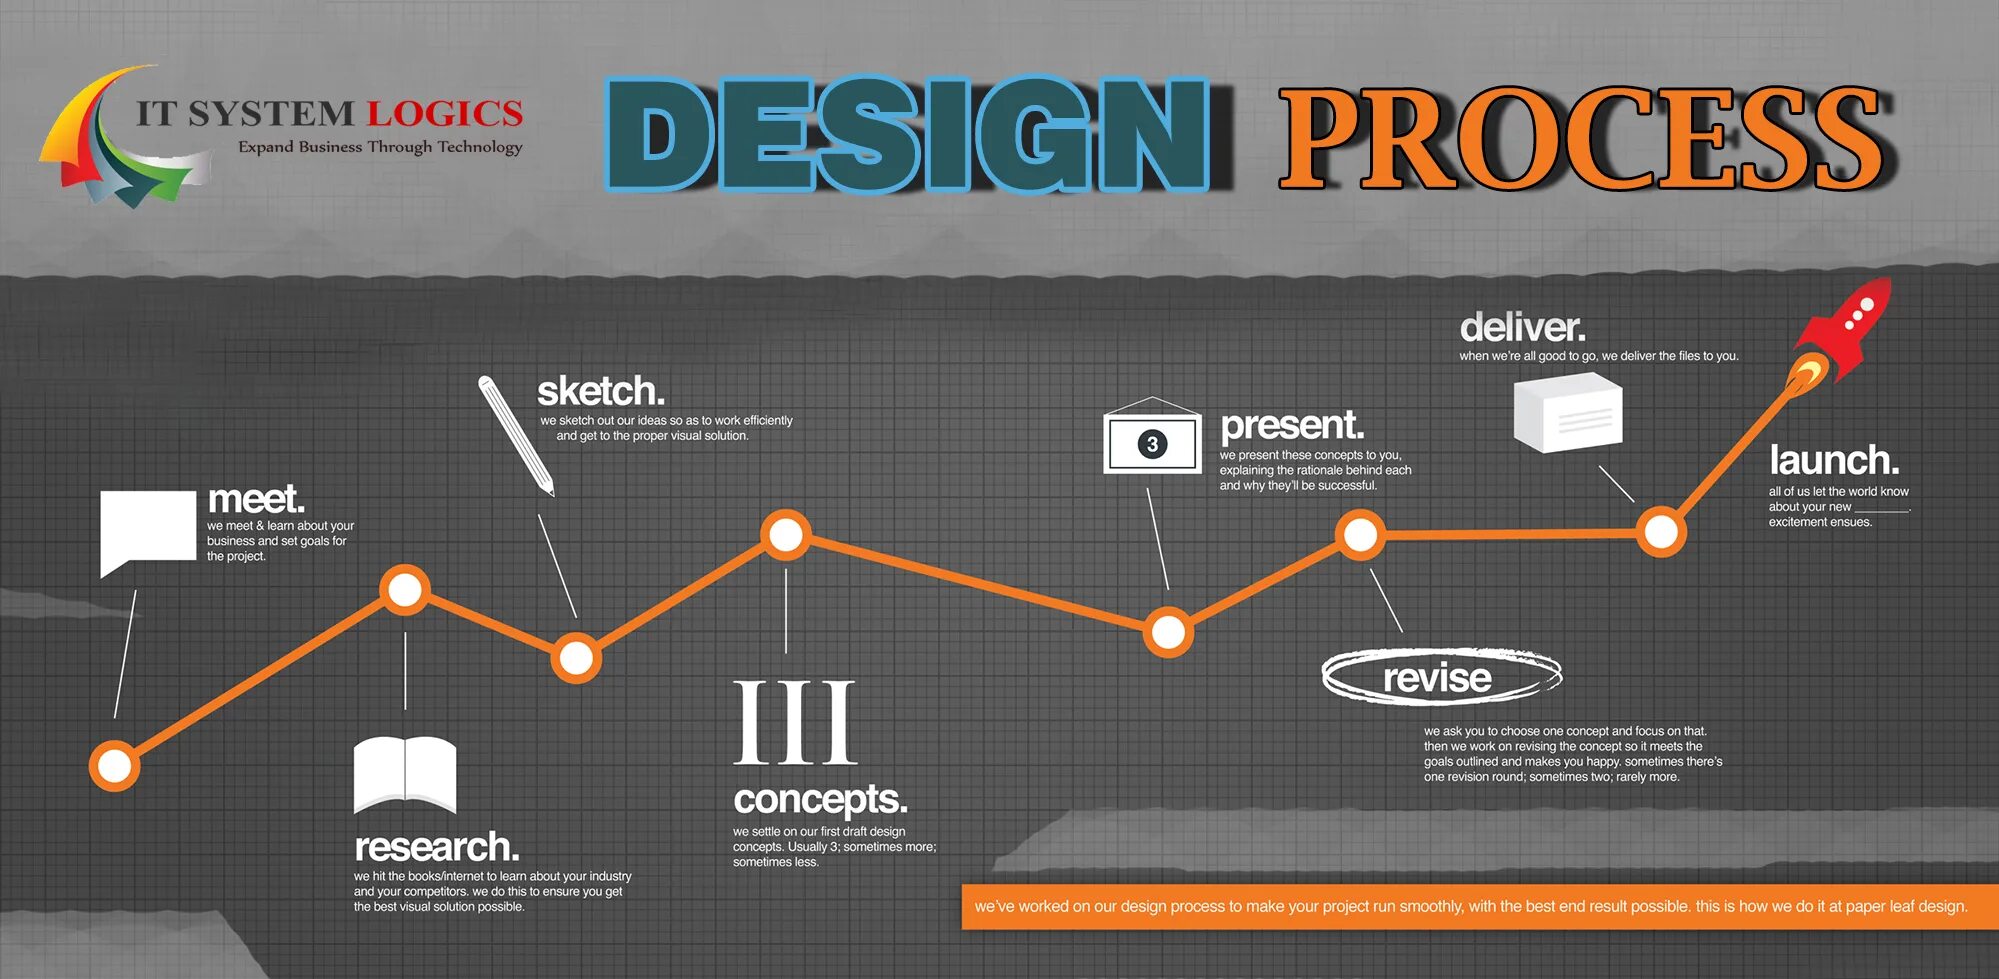 Rpo collection. Дизайн process. Design process poster. Process Design package. Design in process.